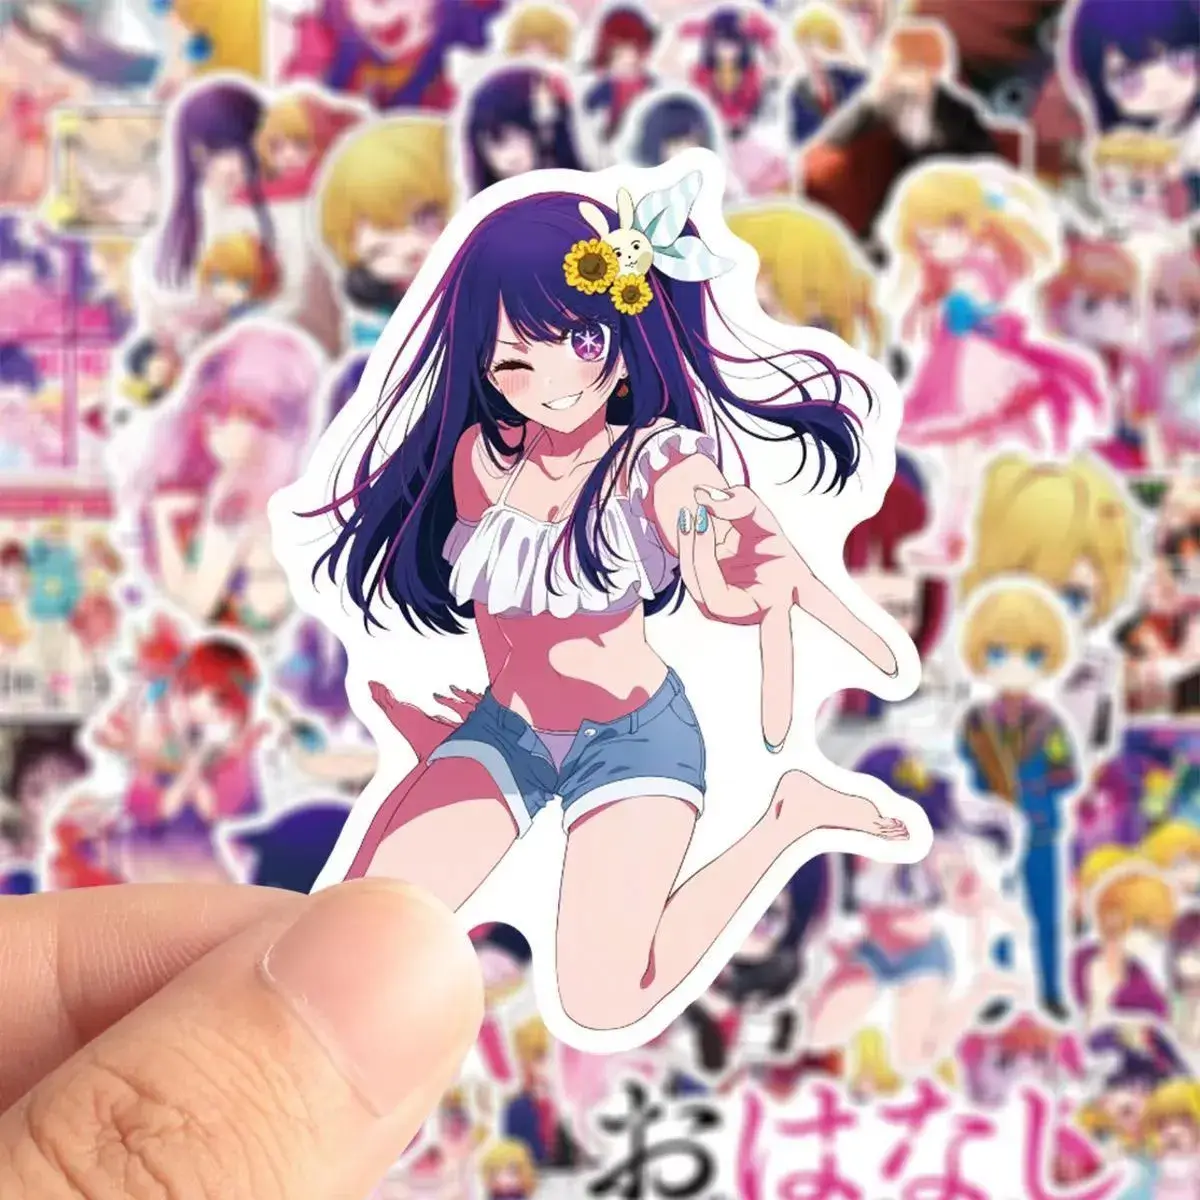 My Hero Academia Anime Waifu Stickers Graffiti Characters For Laptop,  Phone, And More From Animetravel, $2.38 | DHgate.Com